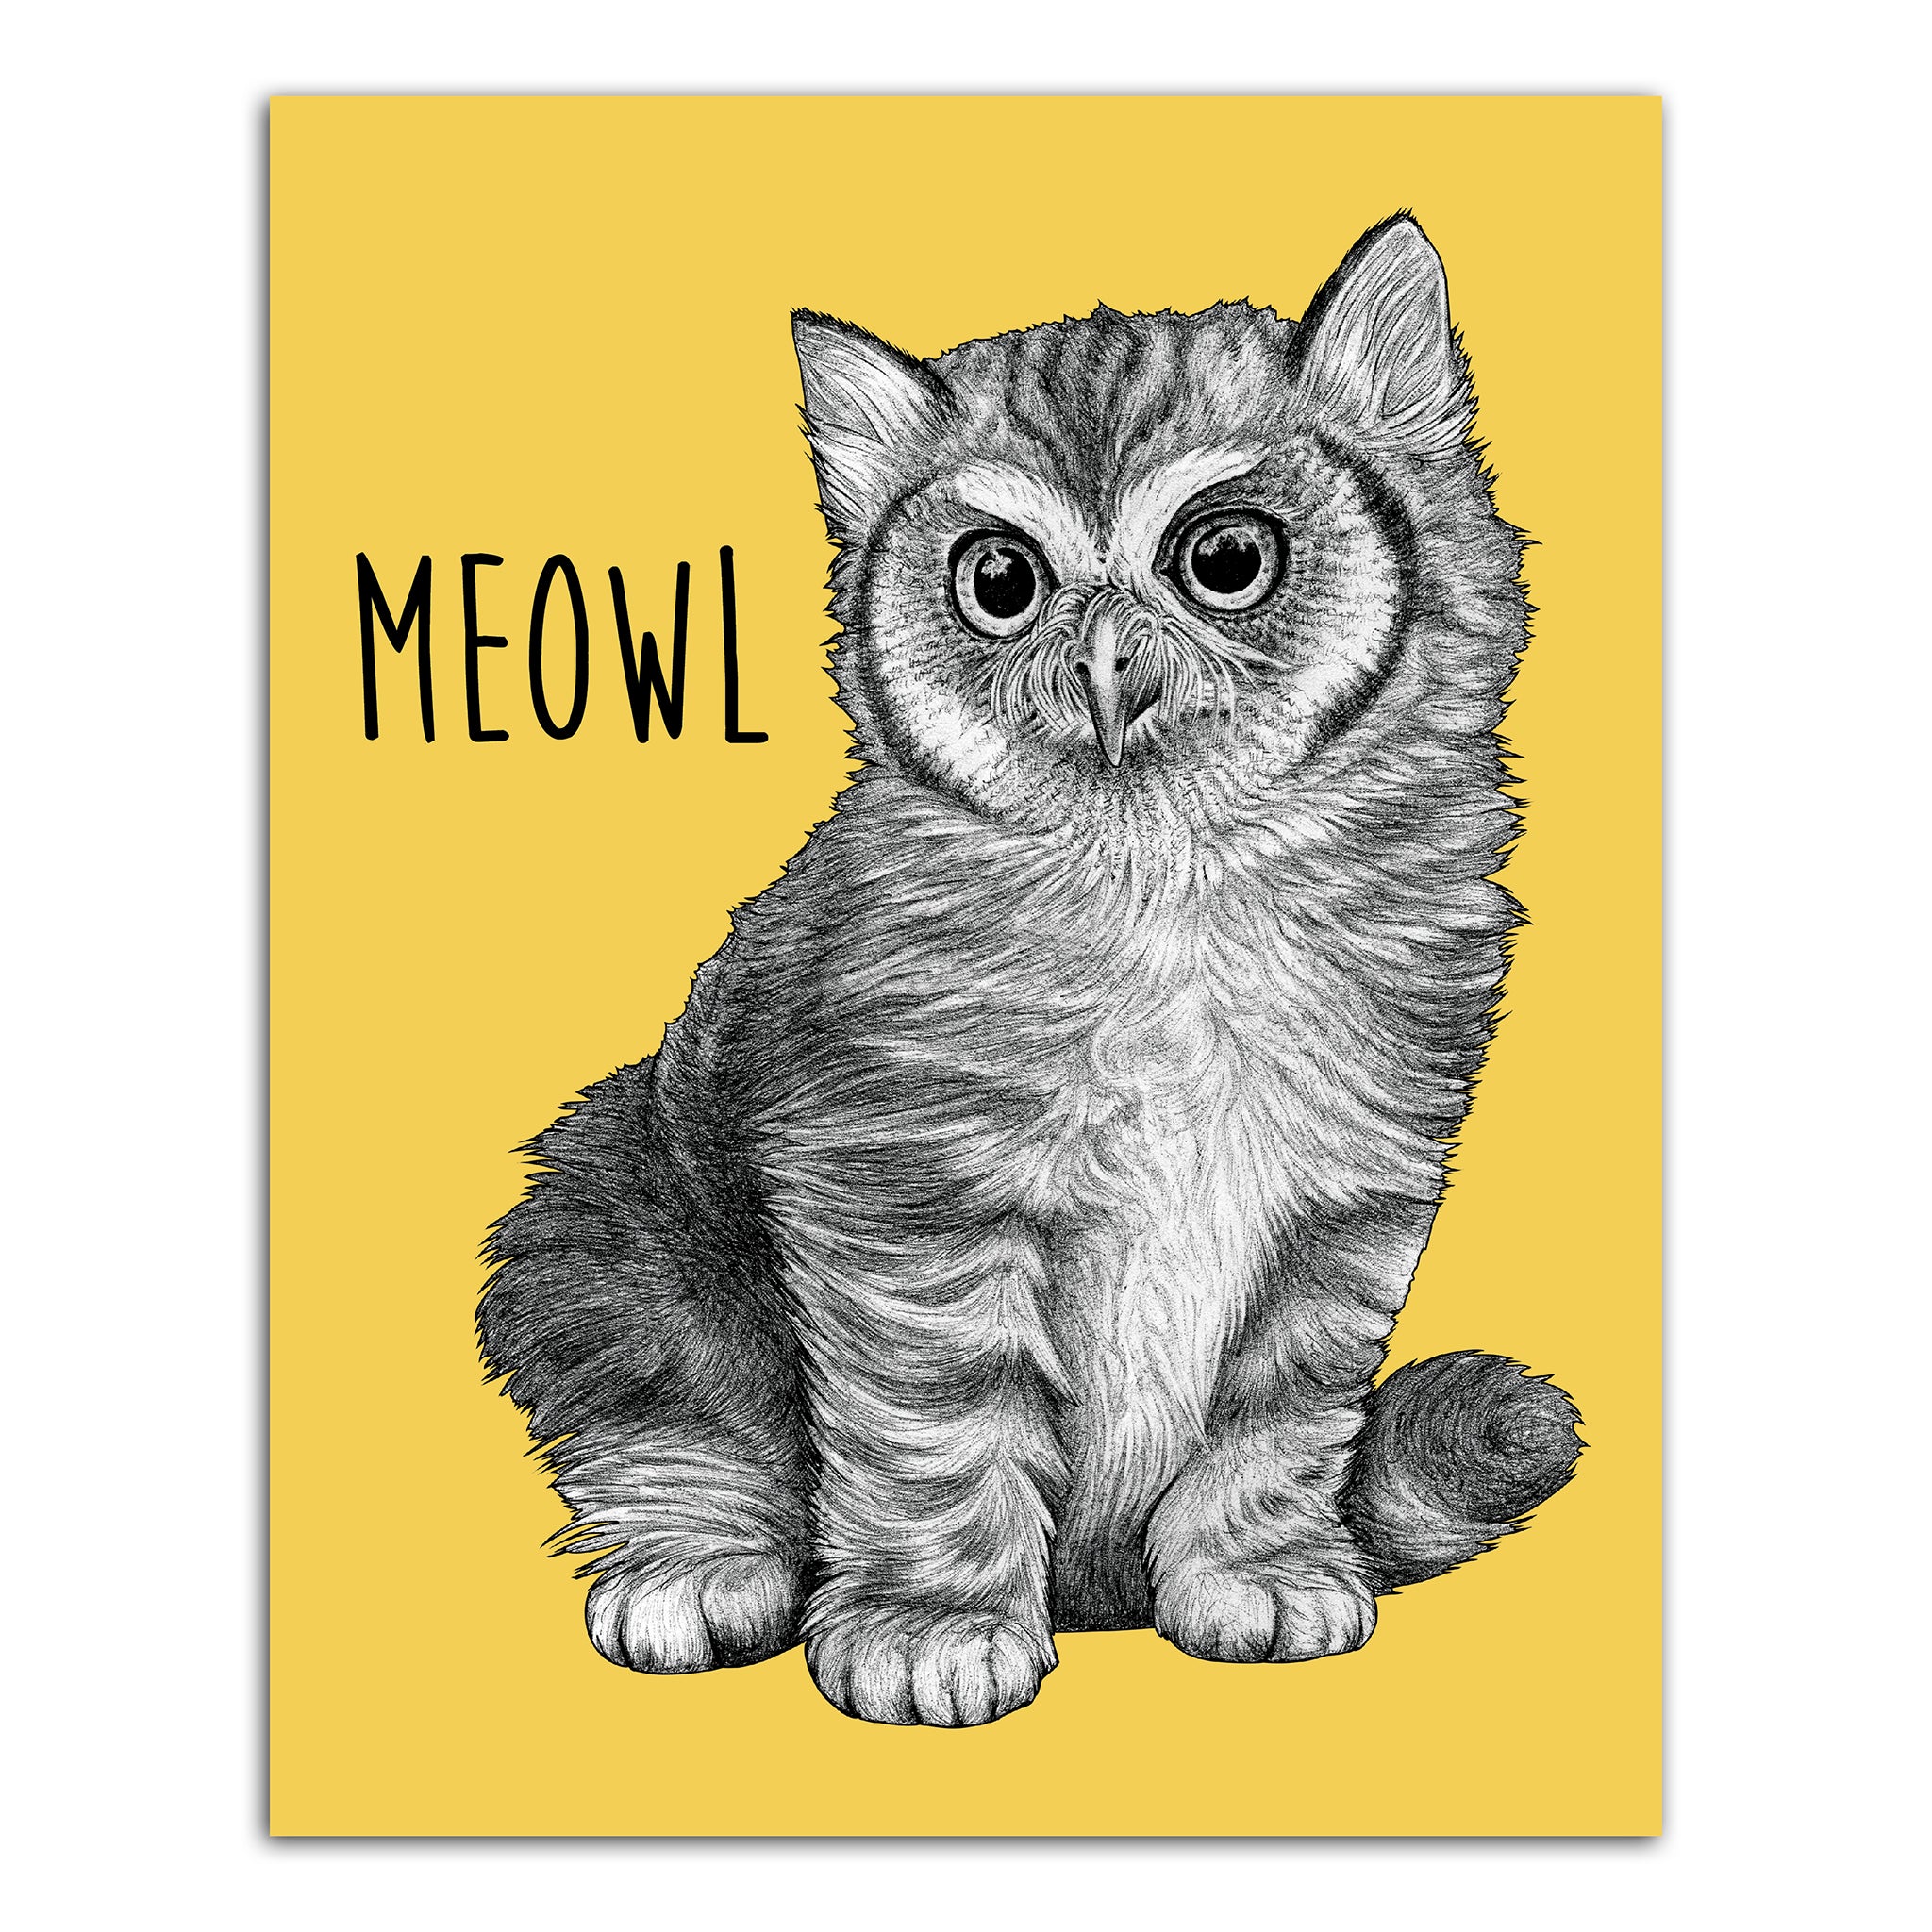 Meowl 8x10" Art Print